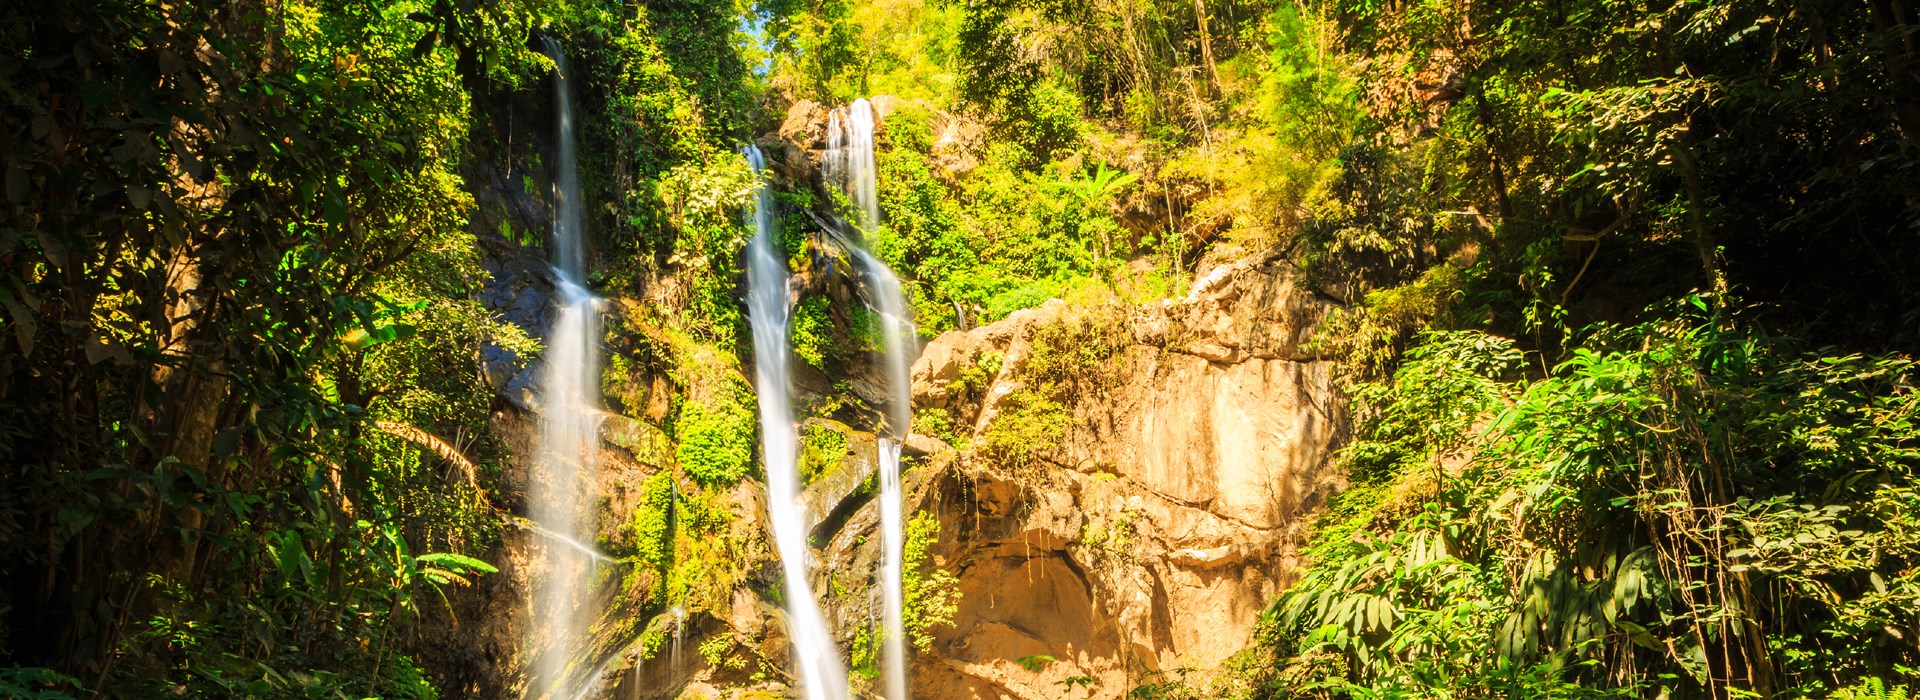 Visiter La cascade naturelle de Mok Fah - Thaïlande